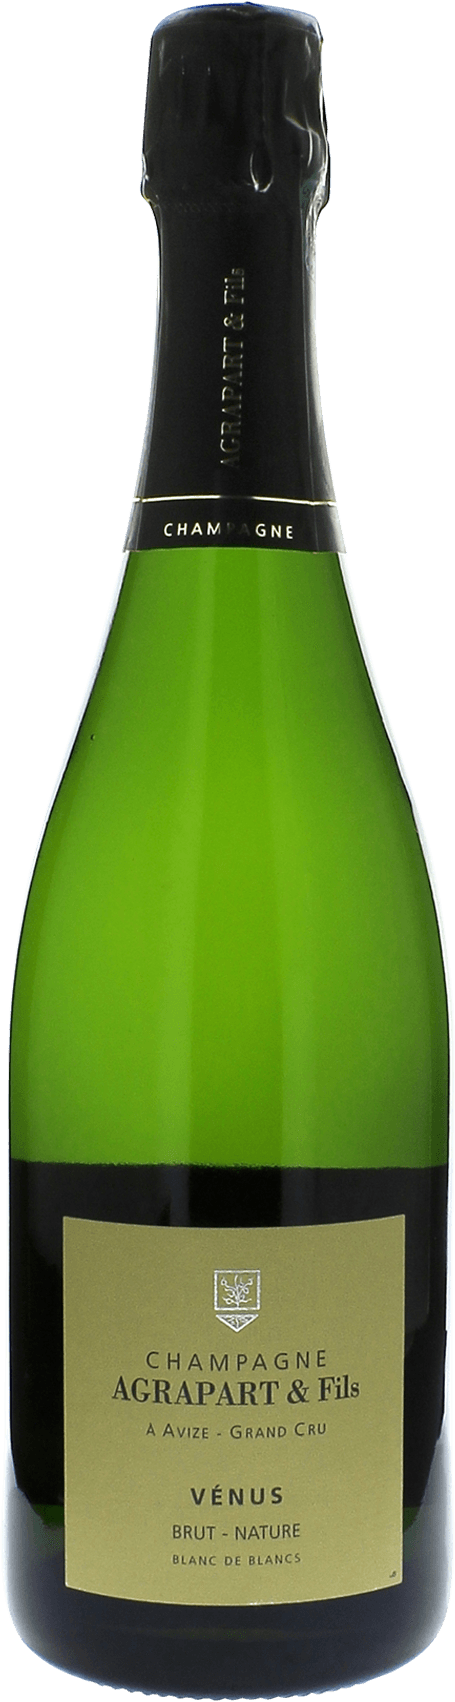 Agrapart  venus brut nature blanc de blancs grand cru 2017  Pascal Agrapart, Champagne